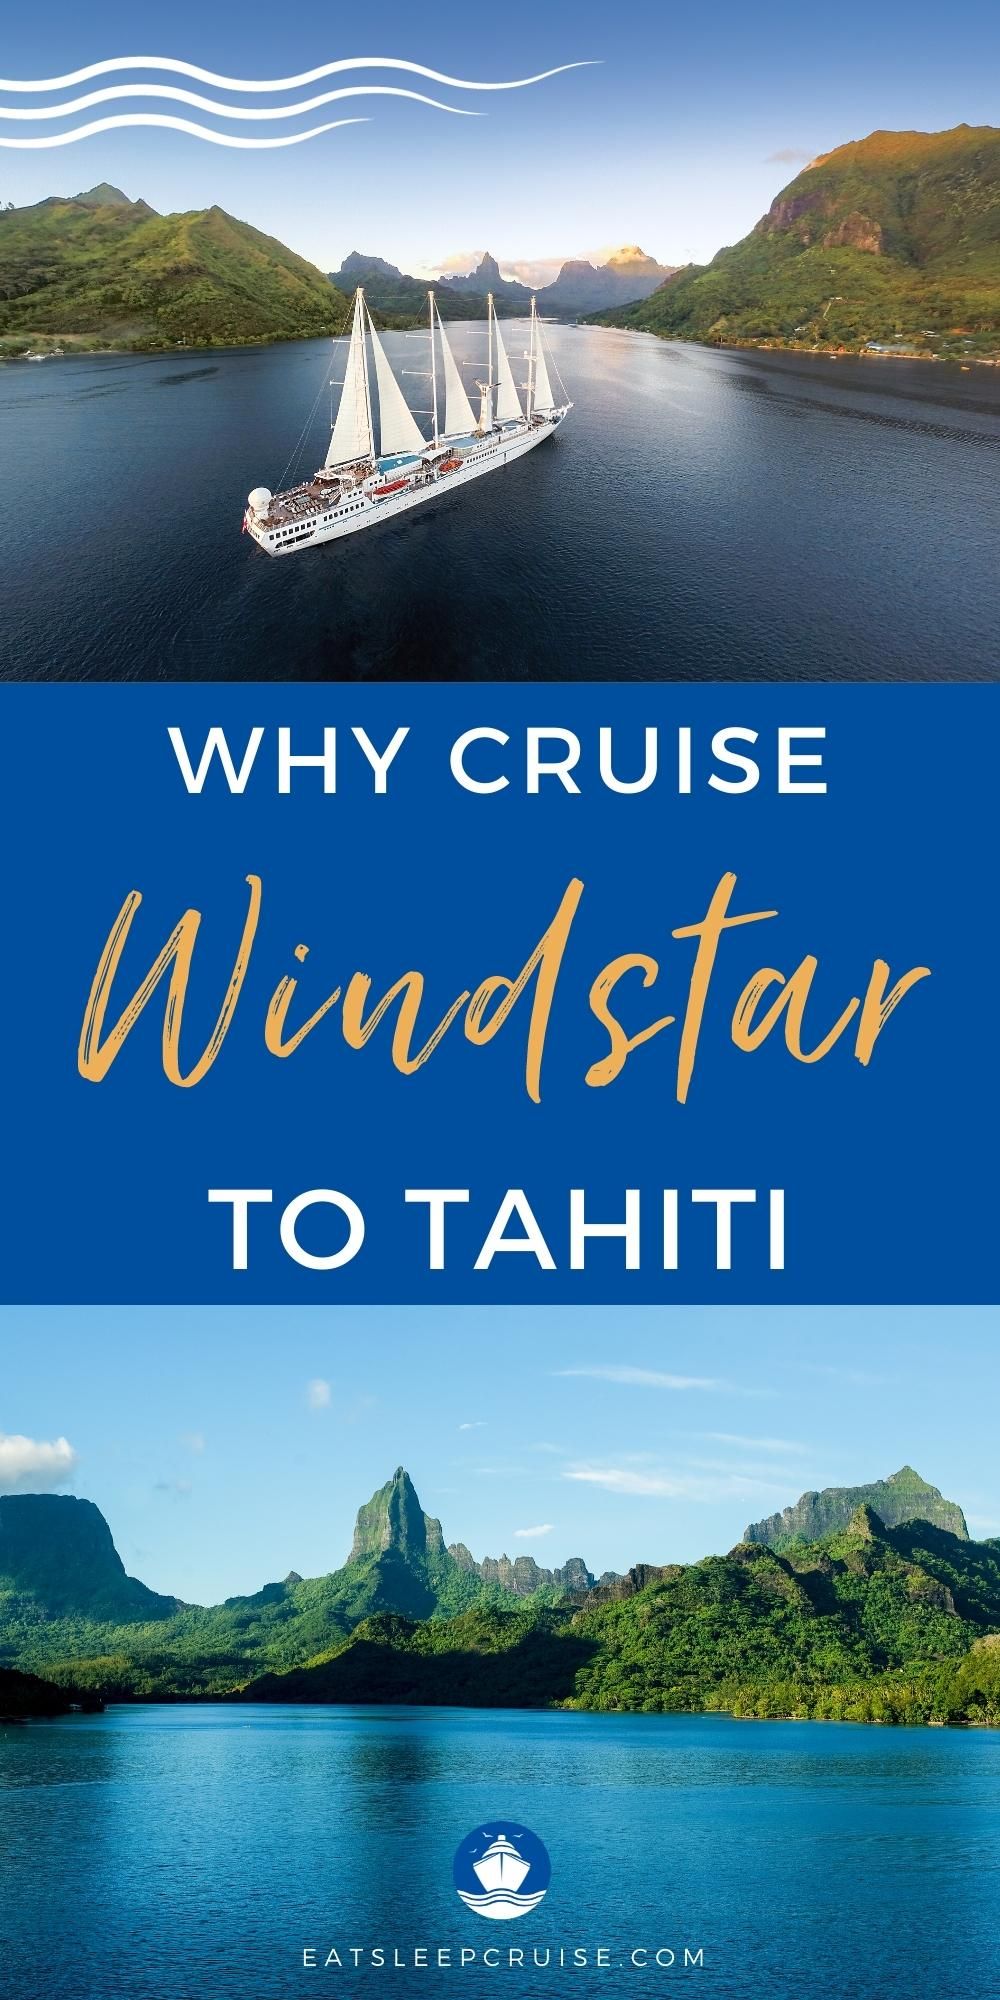 Windstar Cruises in Tahiti